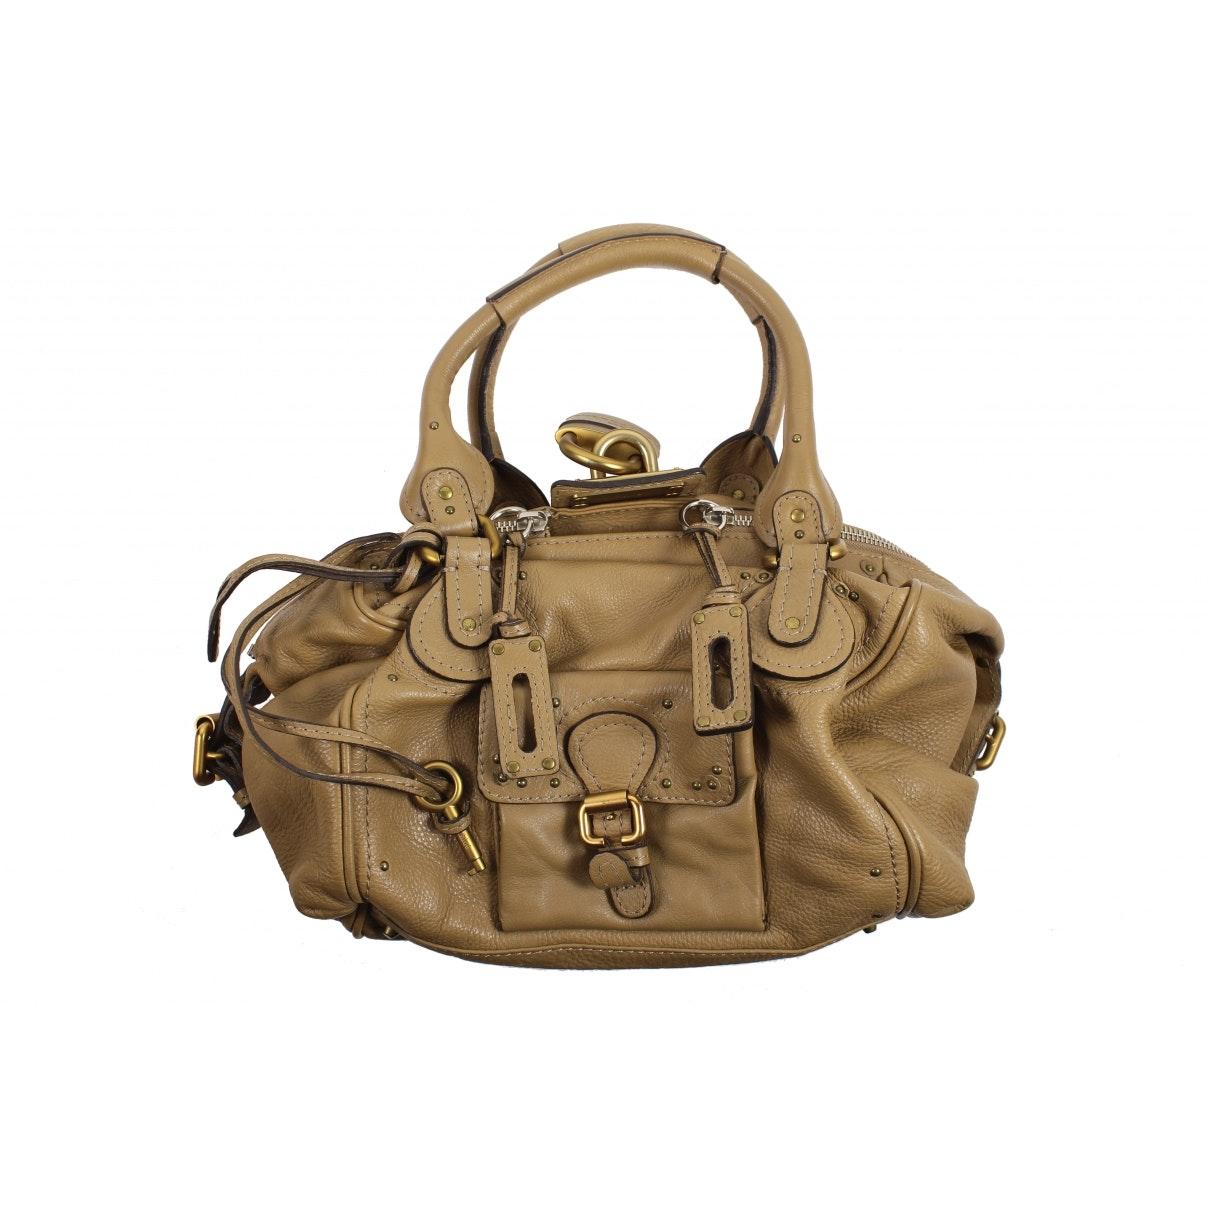 Chloé Paddington Camel Leather Handbag in Natural - Lyst